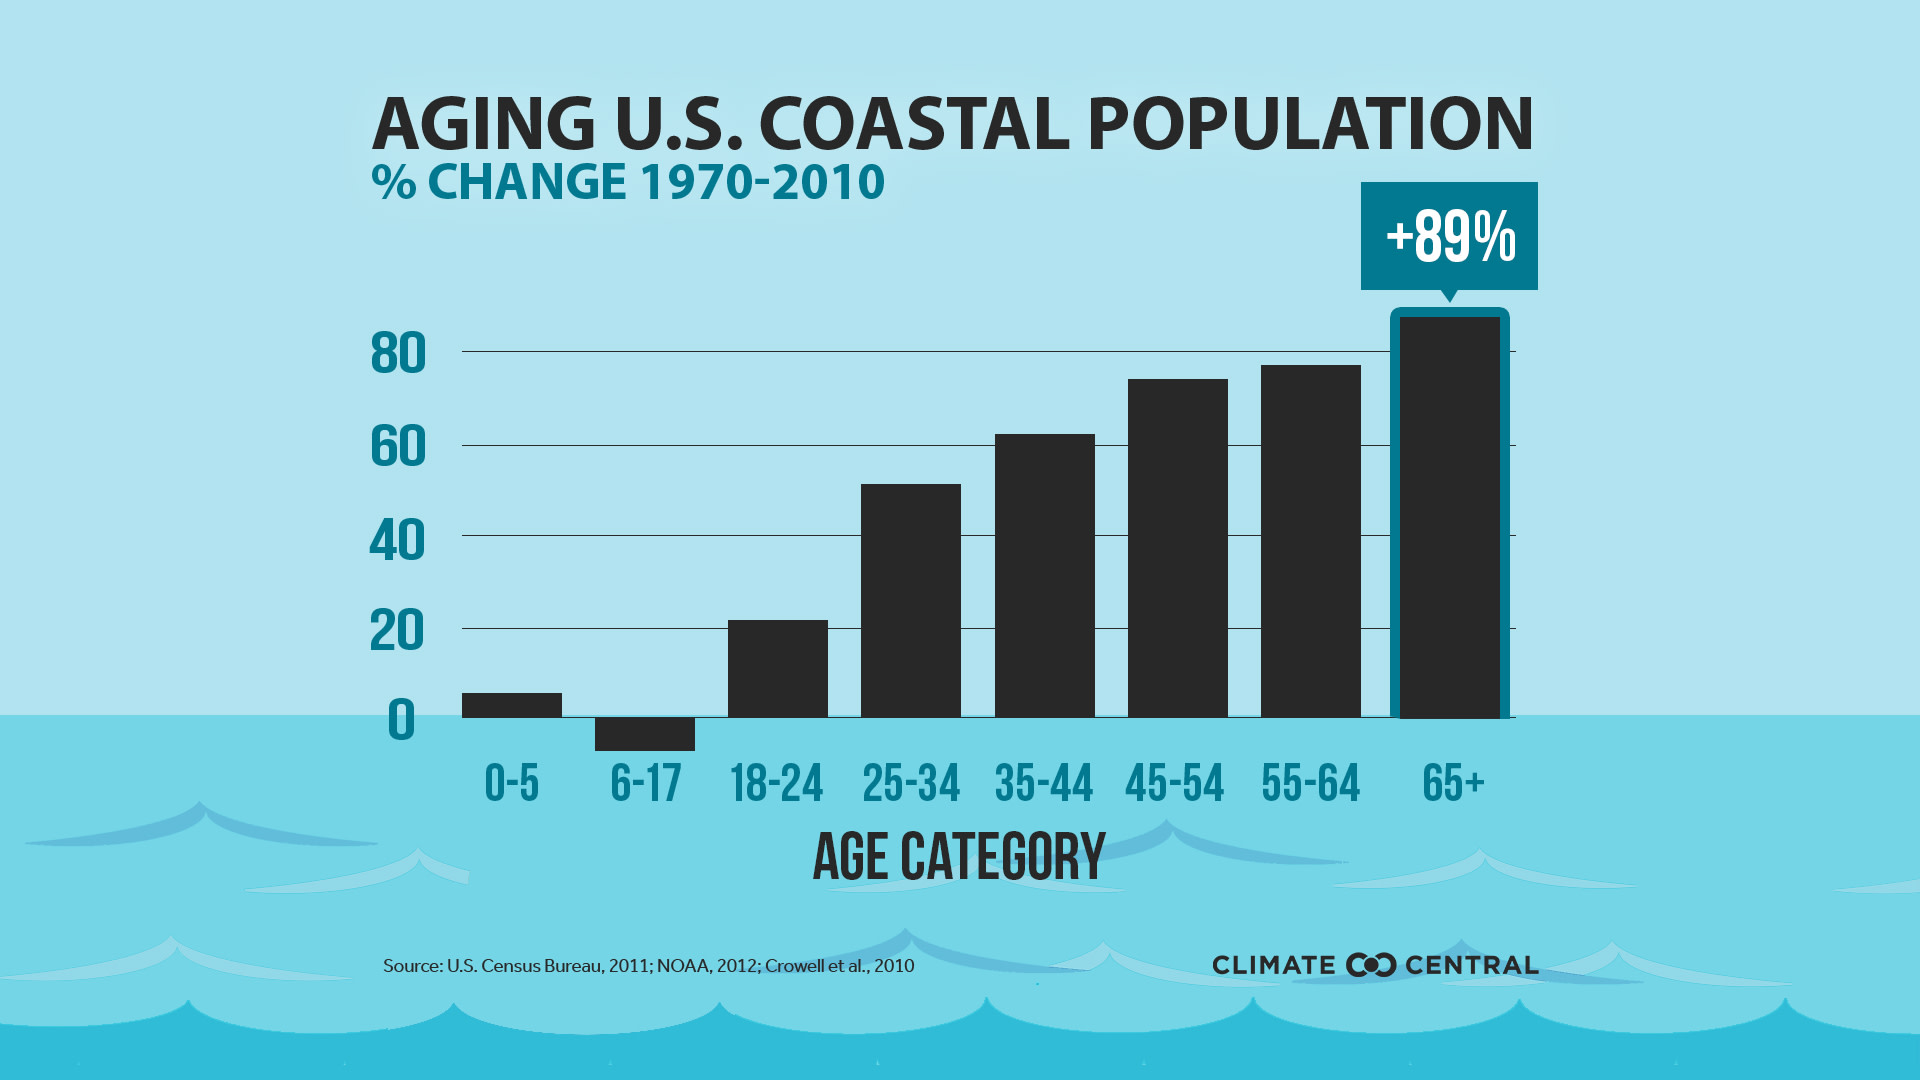 Aging US Coastal Population - Climate change impacts seniors living near the coast